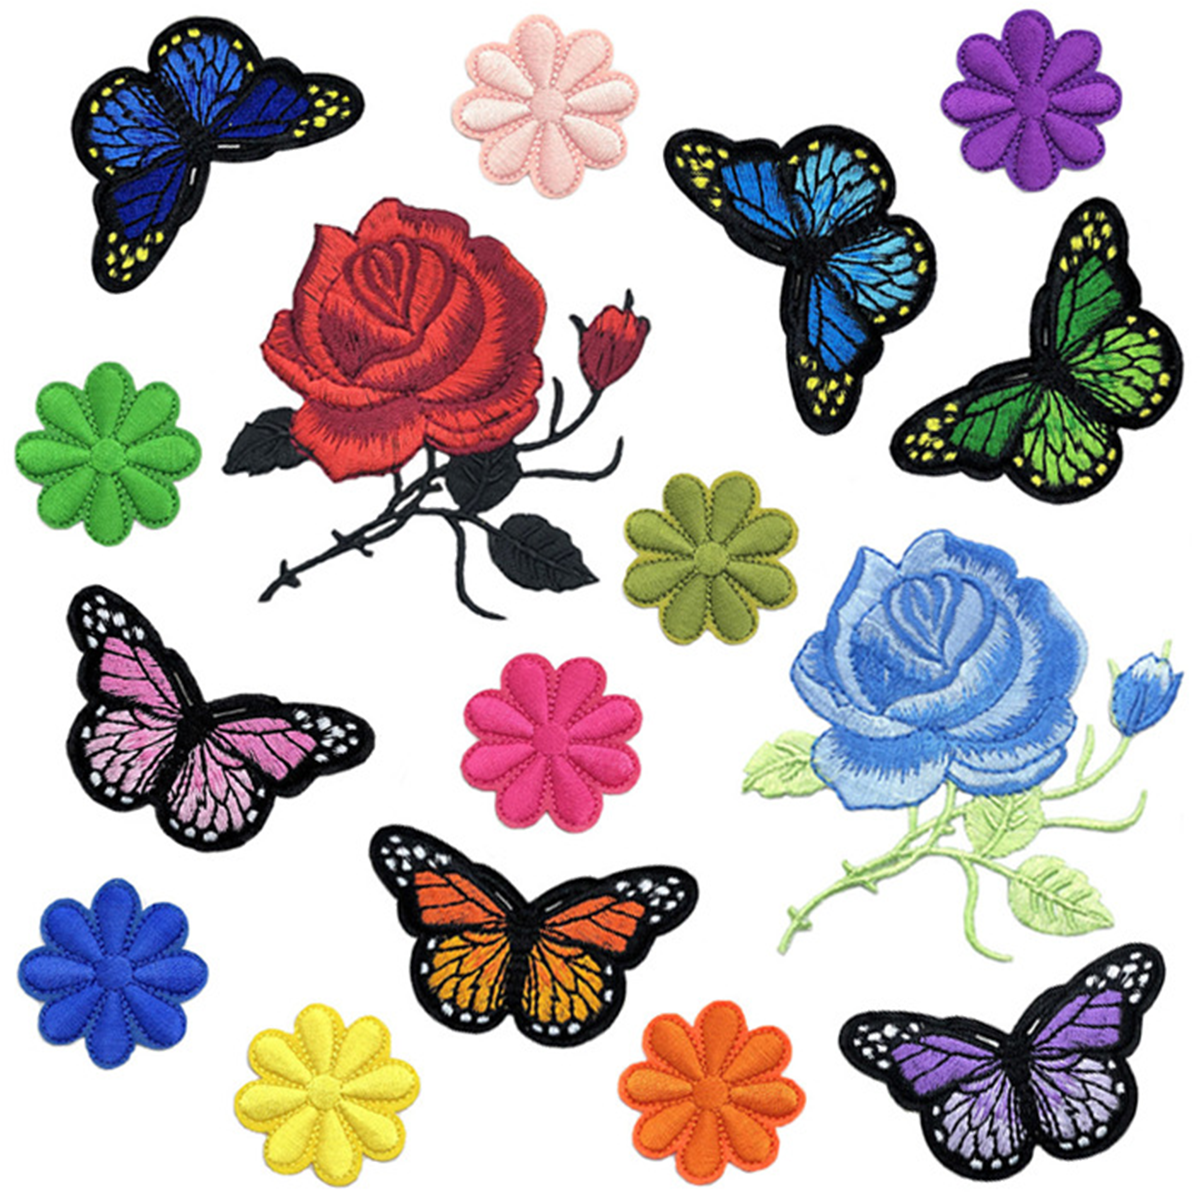 Geek-M 20 Pcs Iron on Patches Flower Applique Patches Mixed Color Decorative Patches